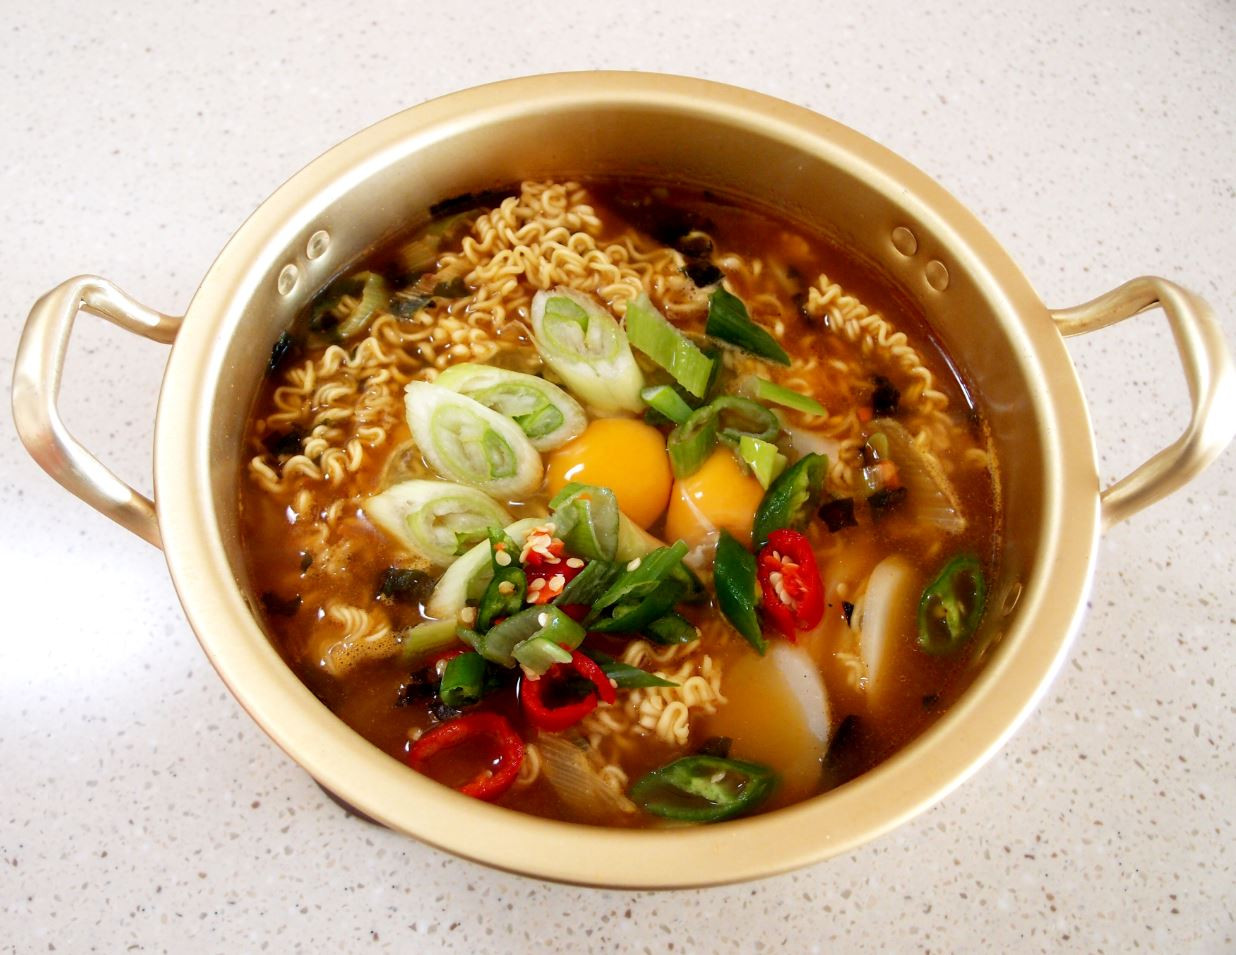 Korean Ramyeon - The Appeal of Korean Instant Noodles